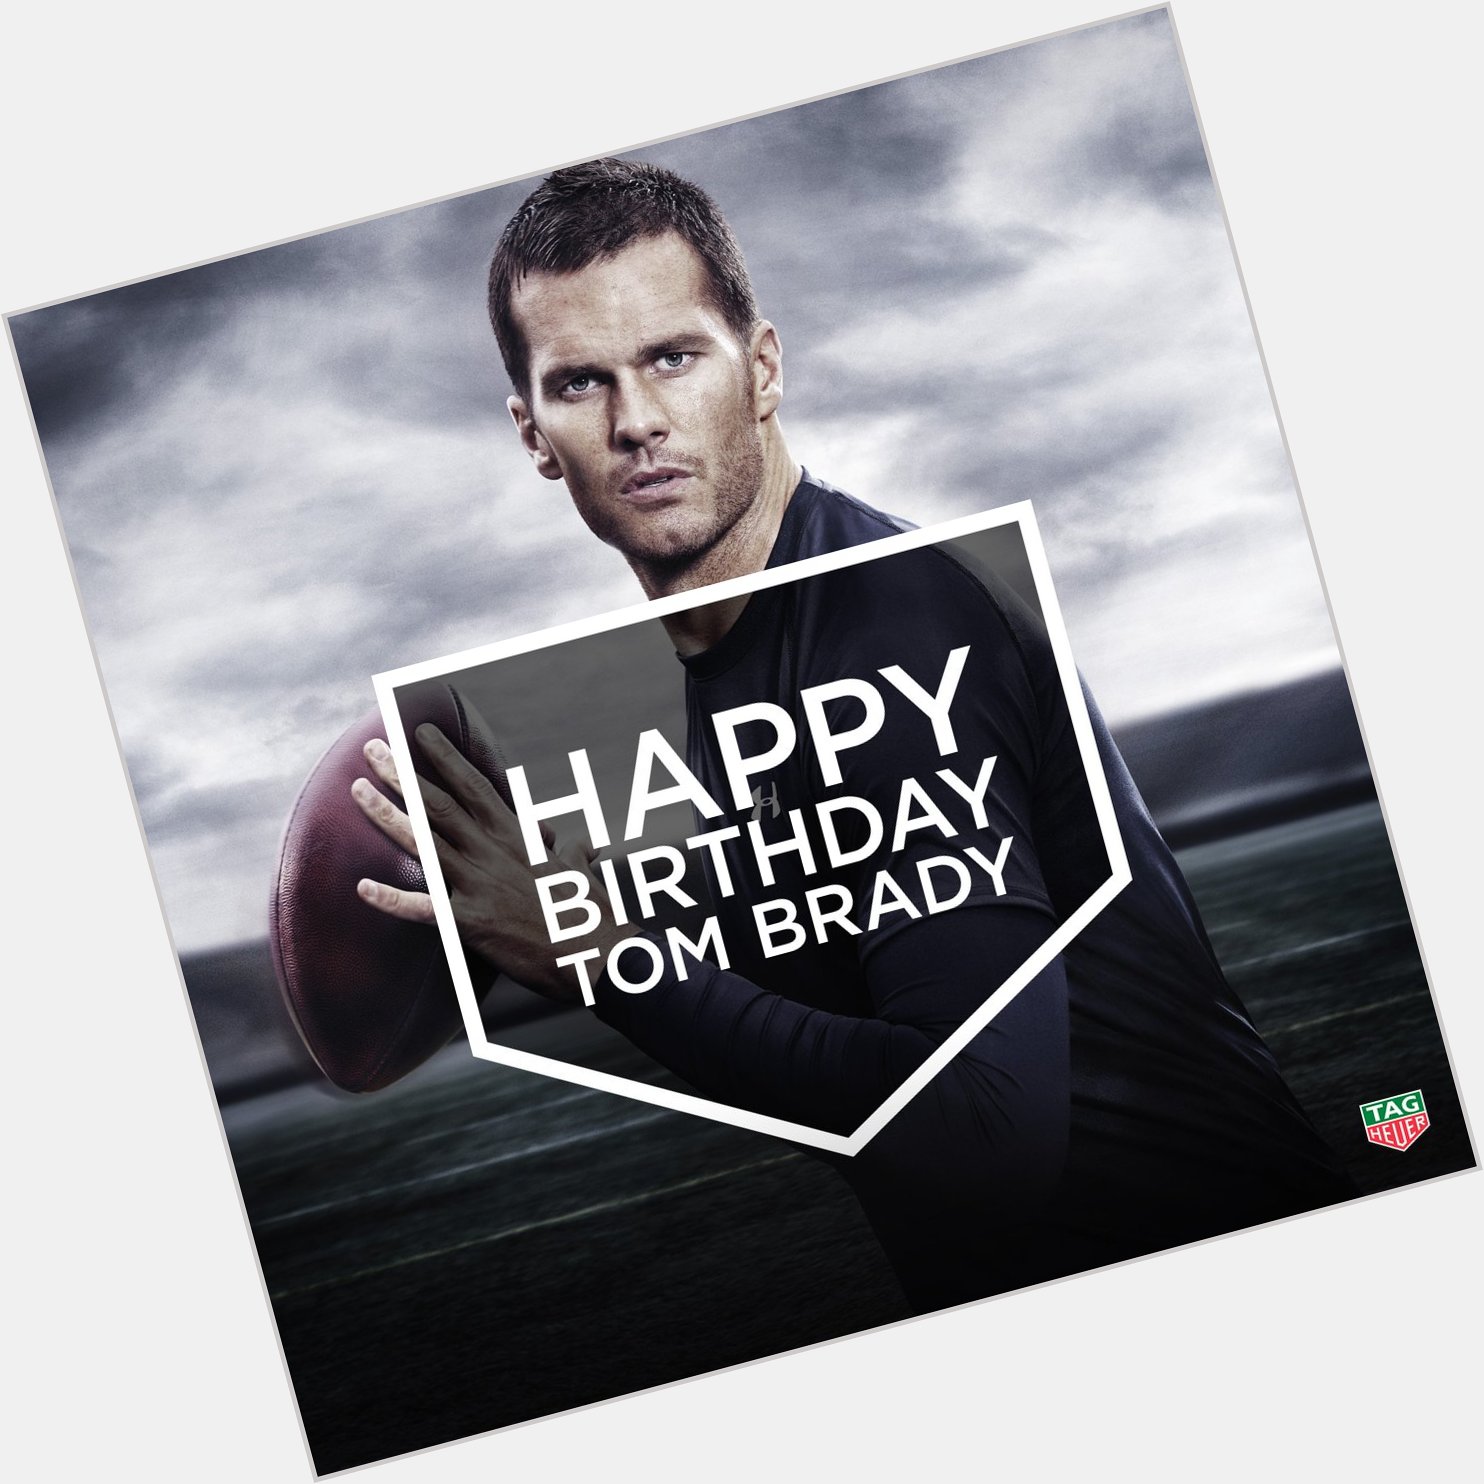 Happy Birthday to the iconic quarterback and our Brand Ambassador Tom Brady! 